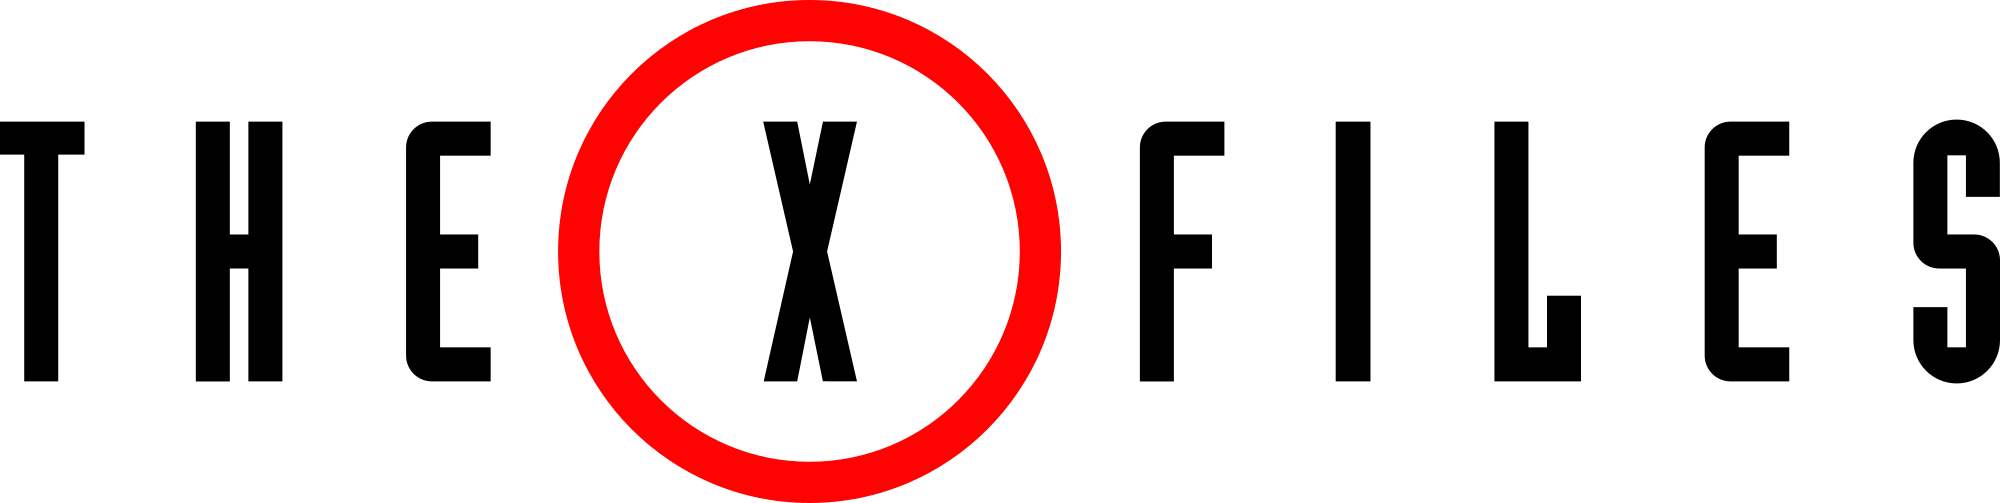 X-Files Logo - The X Files brand logo.svg